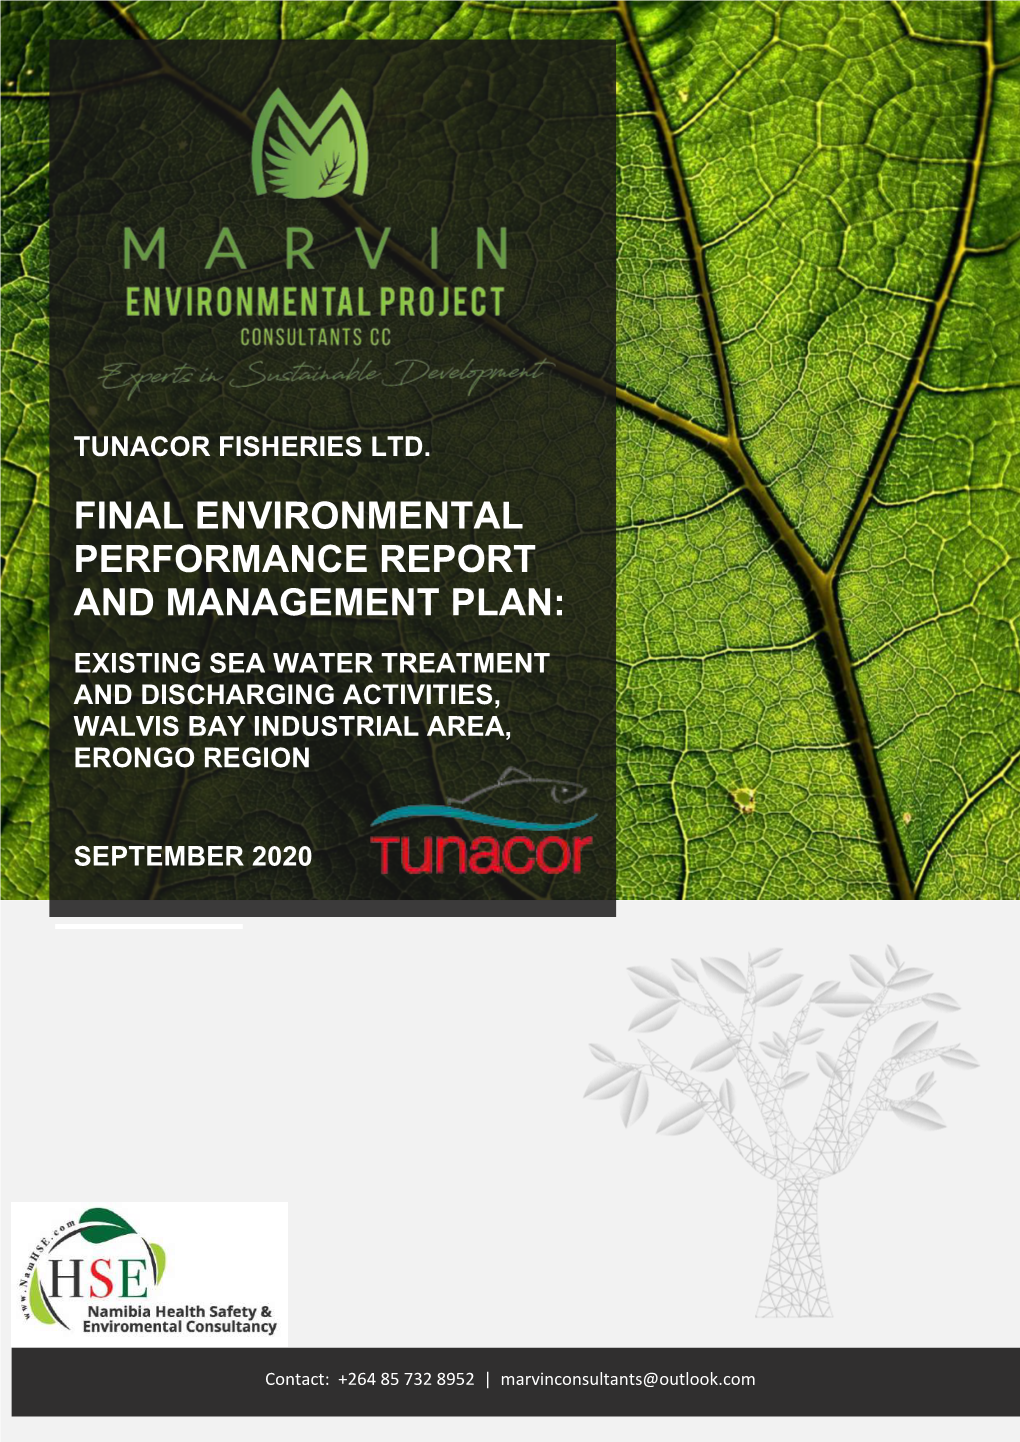 Tunacor Fisheries Ltd. Final Environmental Performance Report and Management Plan